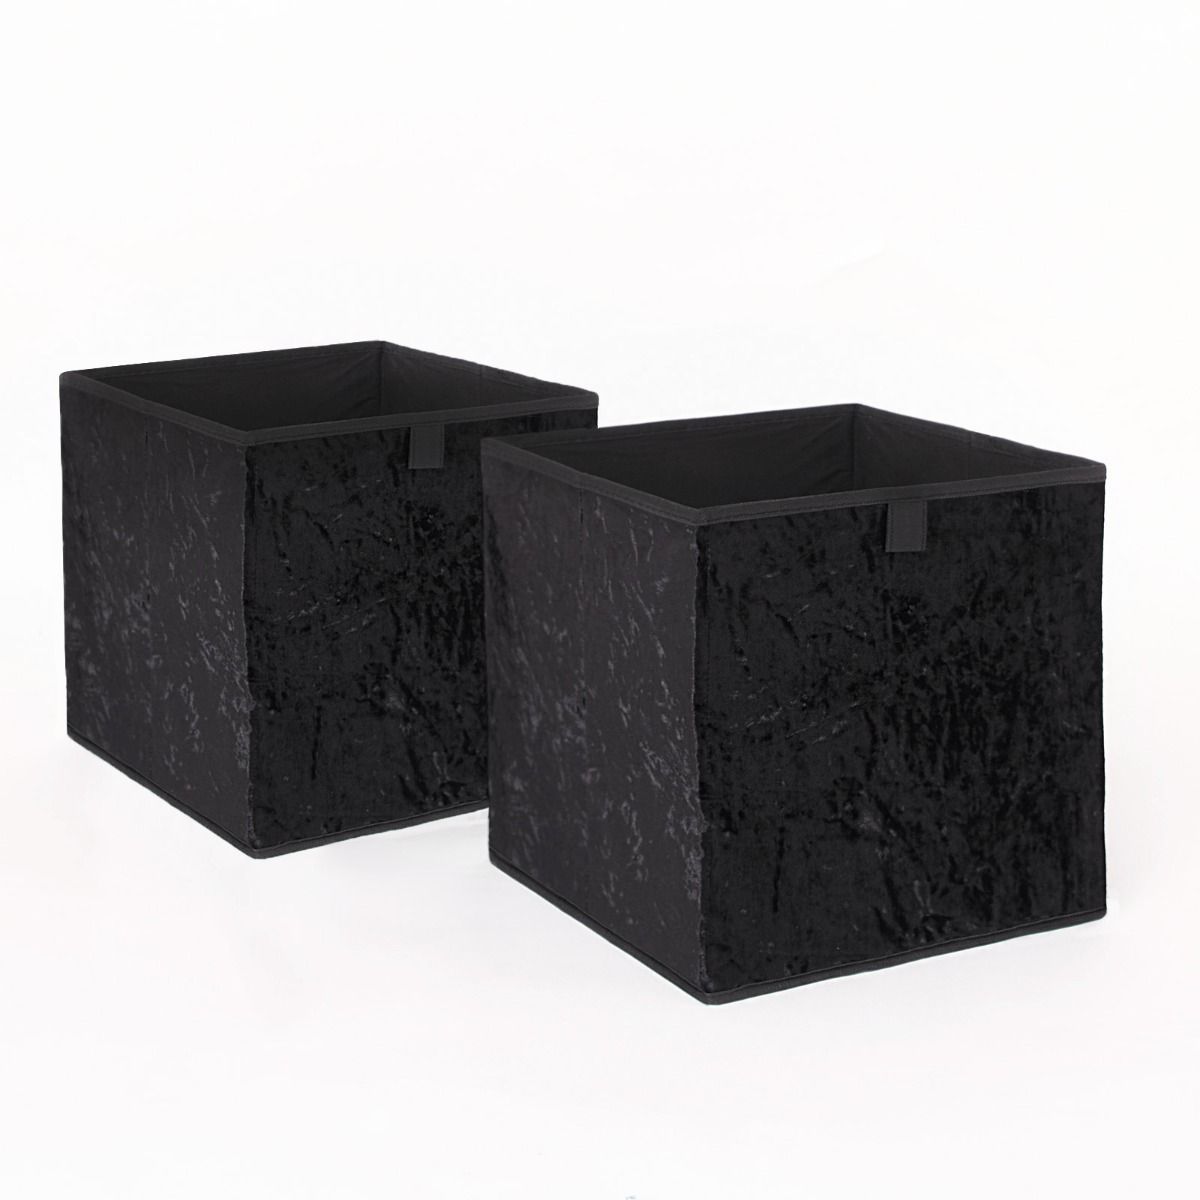 OHS Crushed Velvet Cube Storage Boxes, Black - 2 Pack